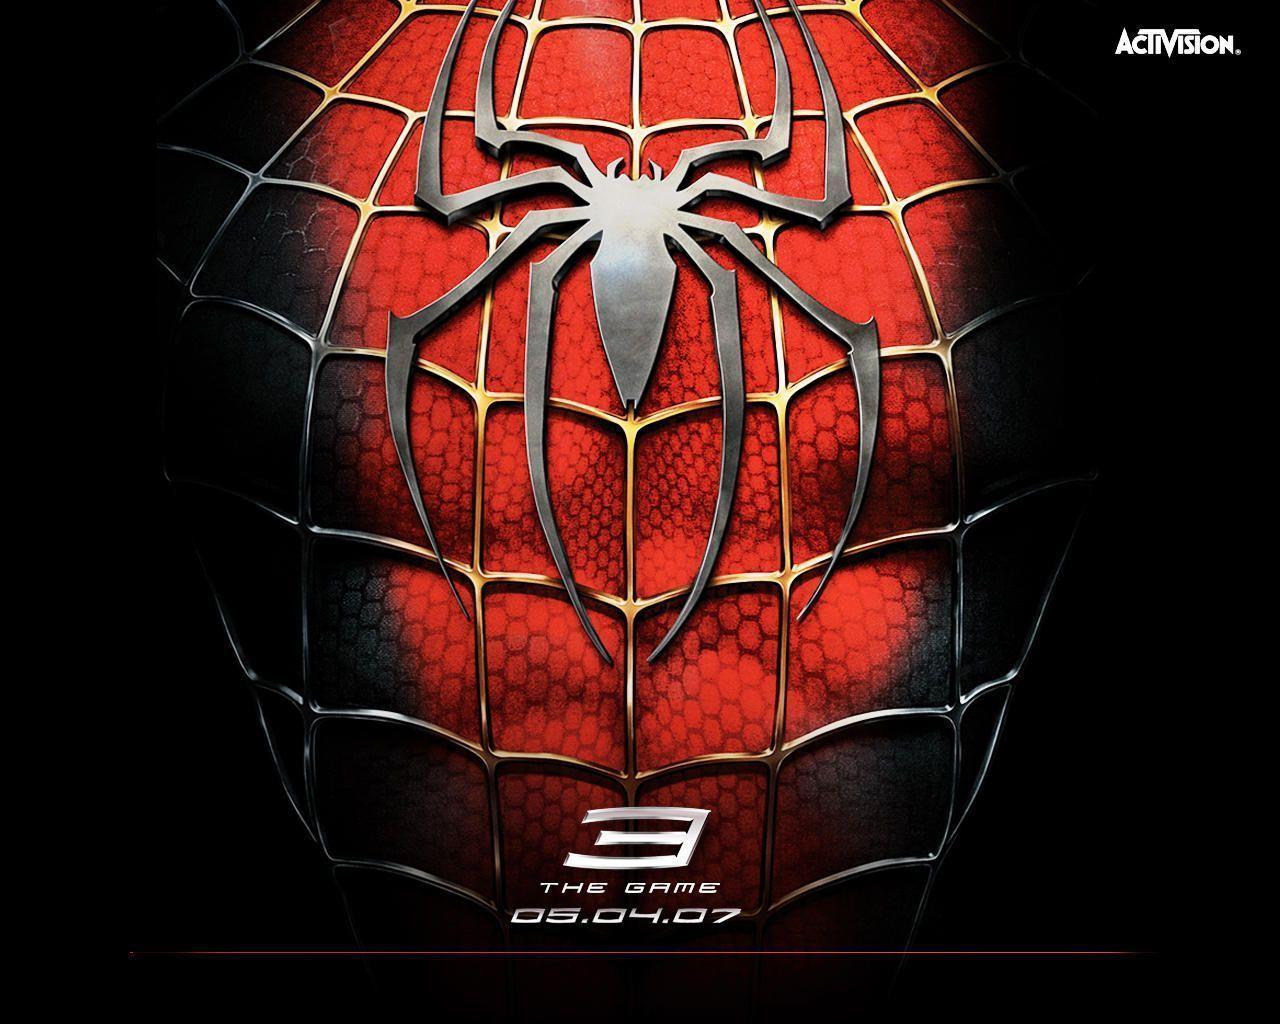 Spiderman 3 Wallpapper Wallpapers